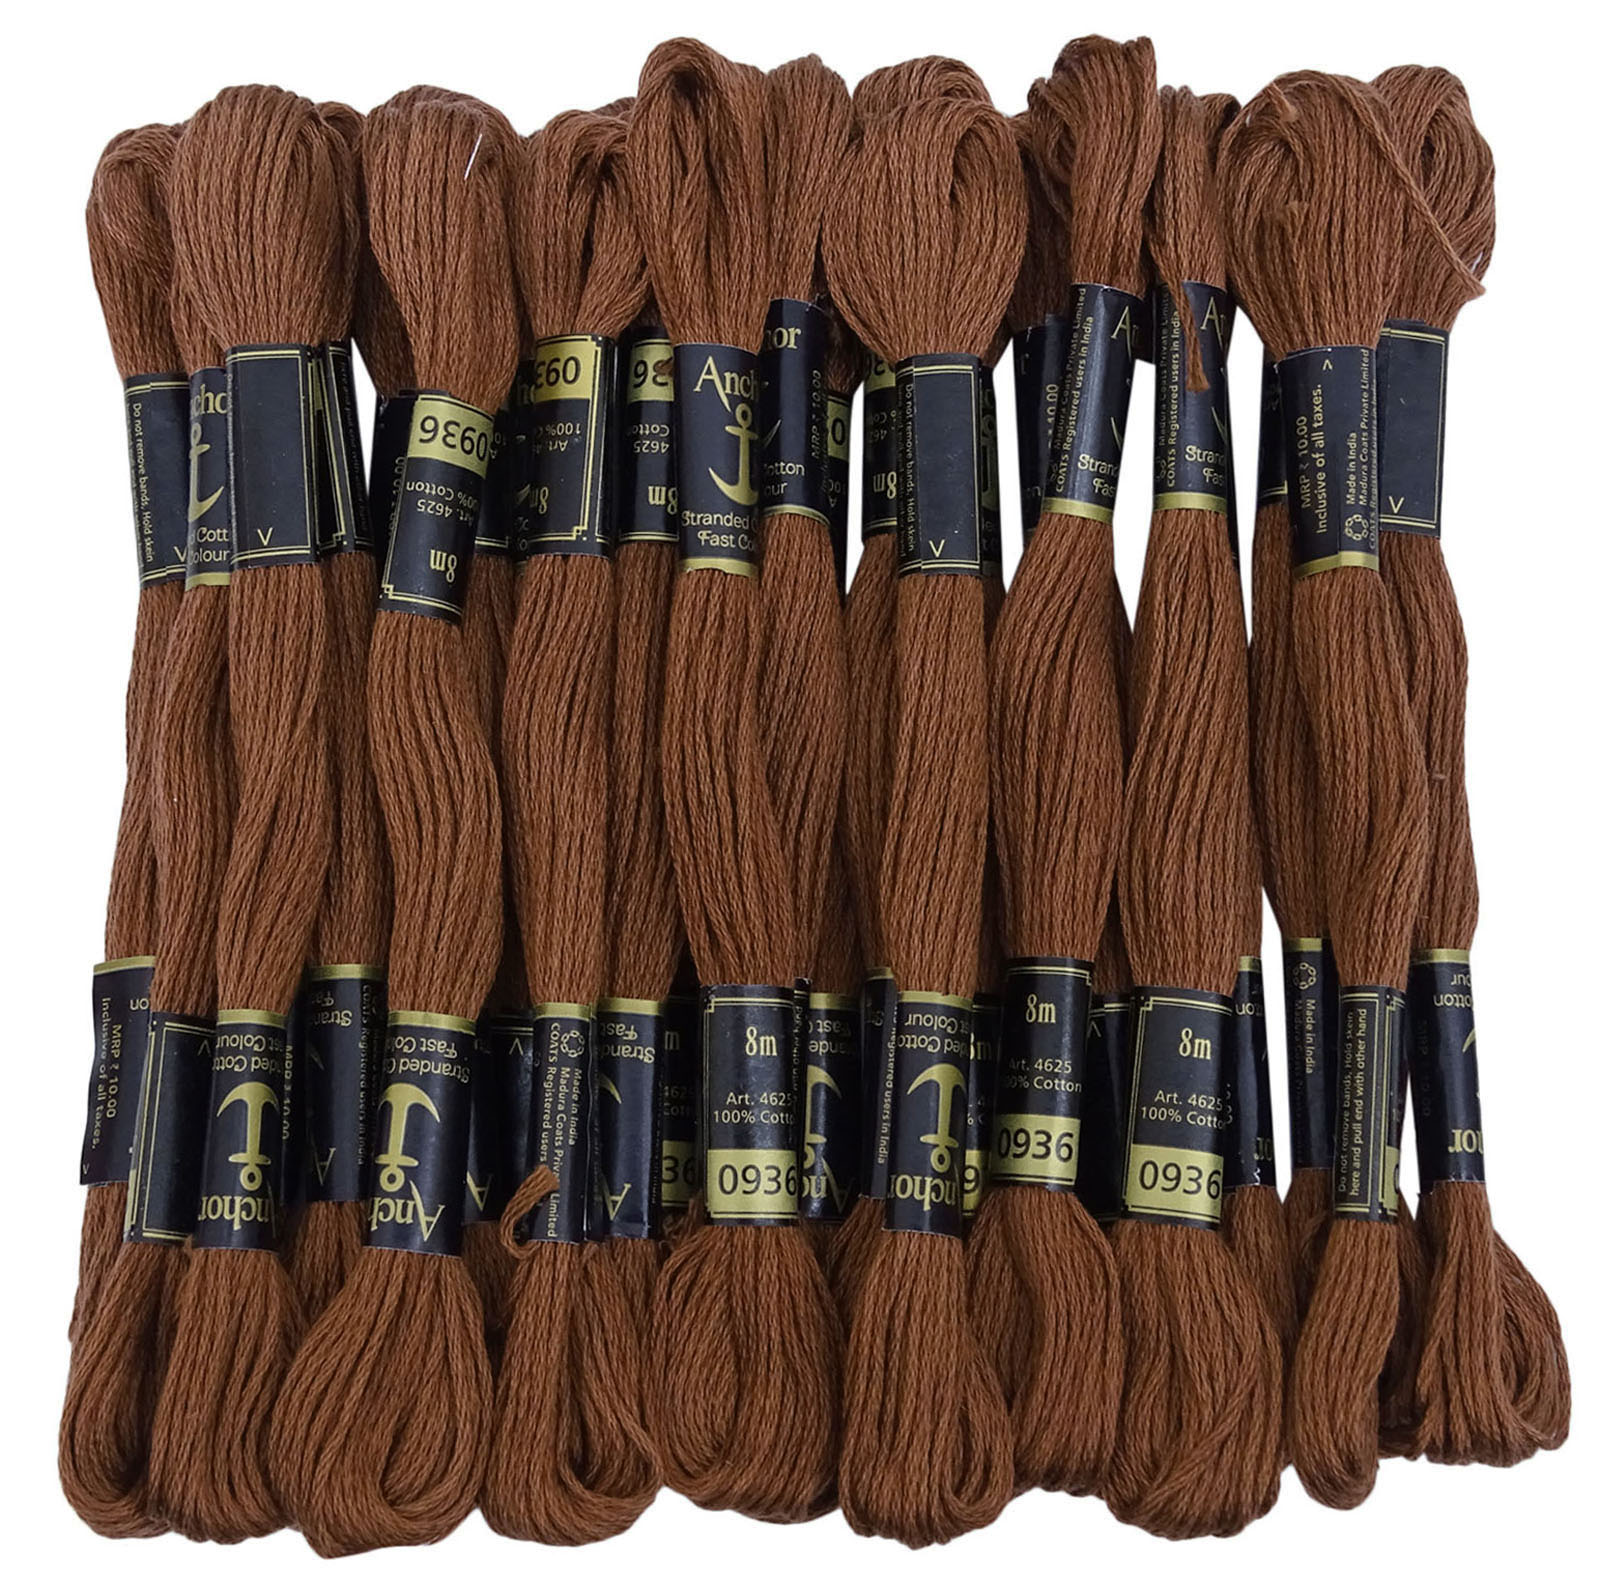 échevettes mix solide & varigated 25 ANCHOR coton perlé cross stitch thread floss